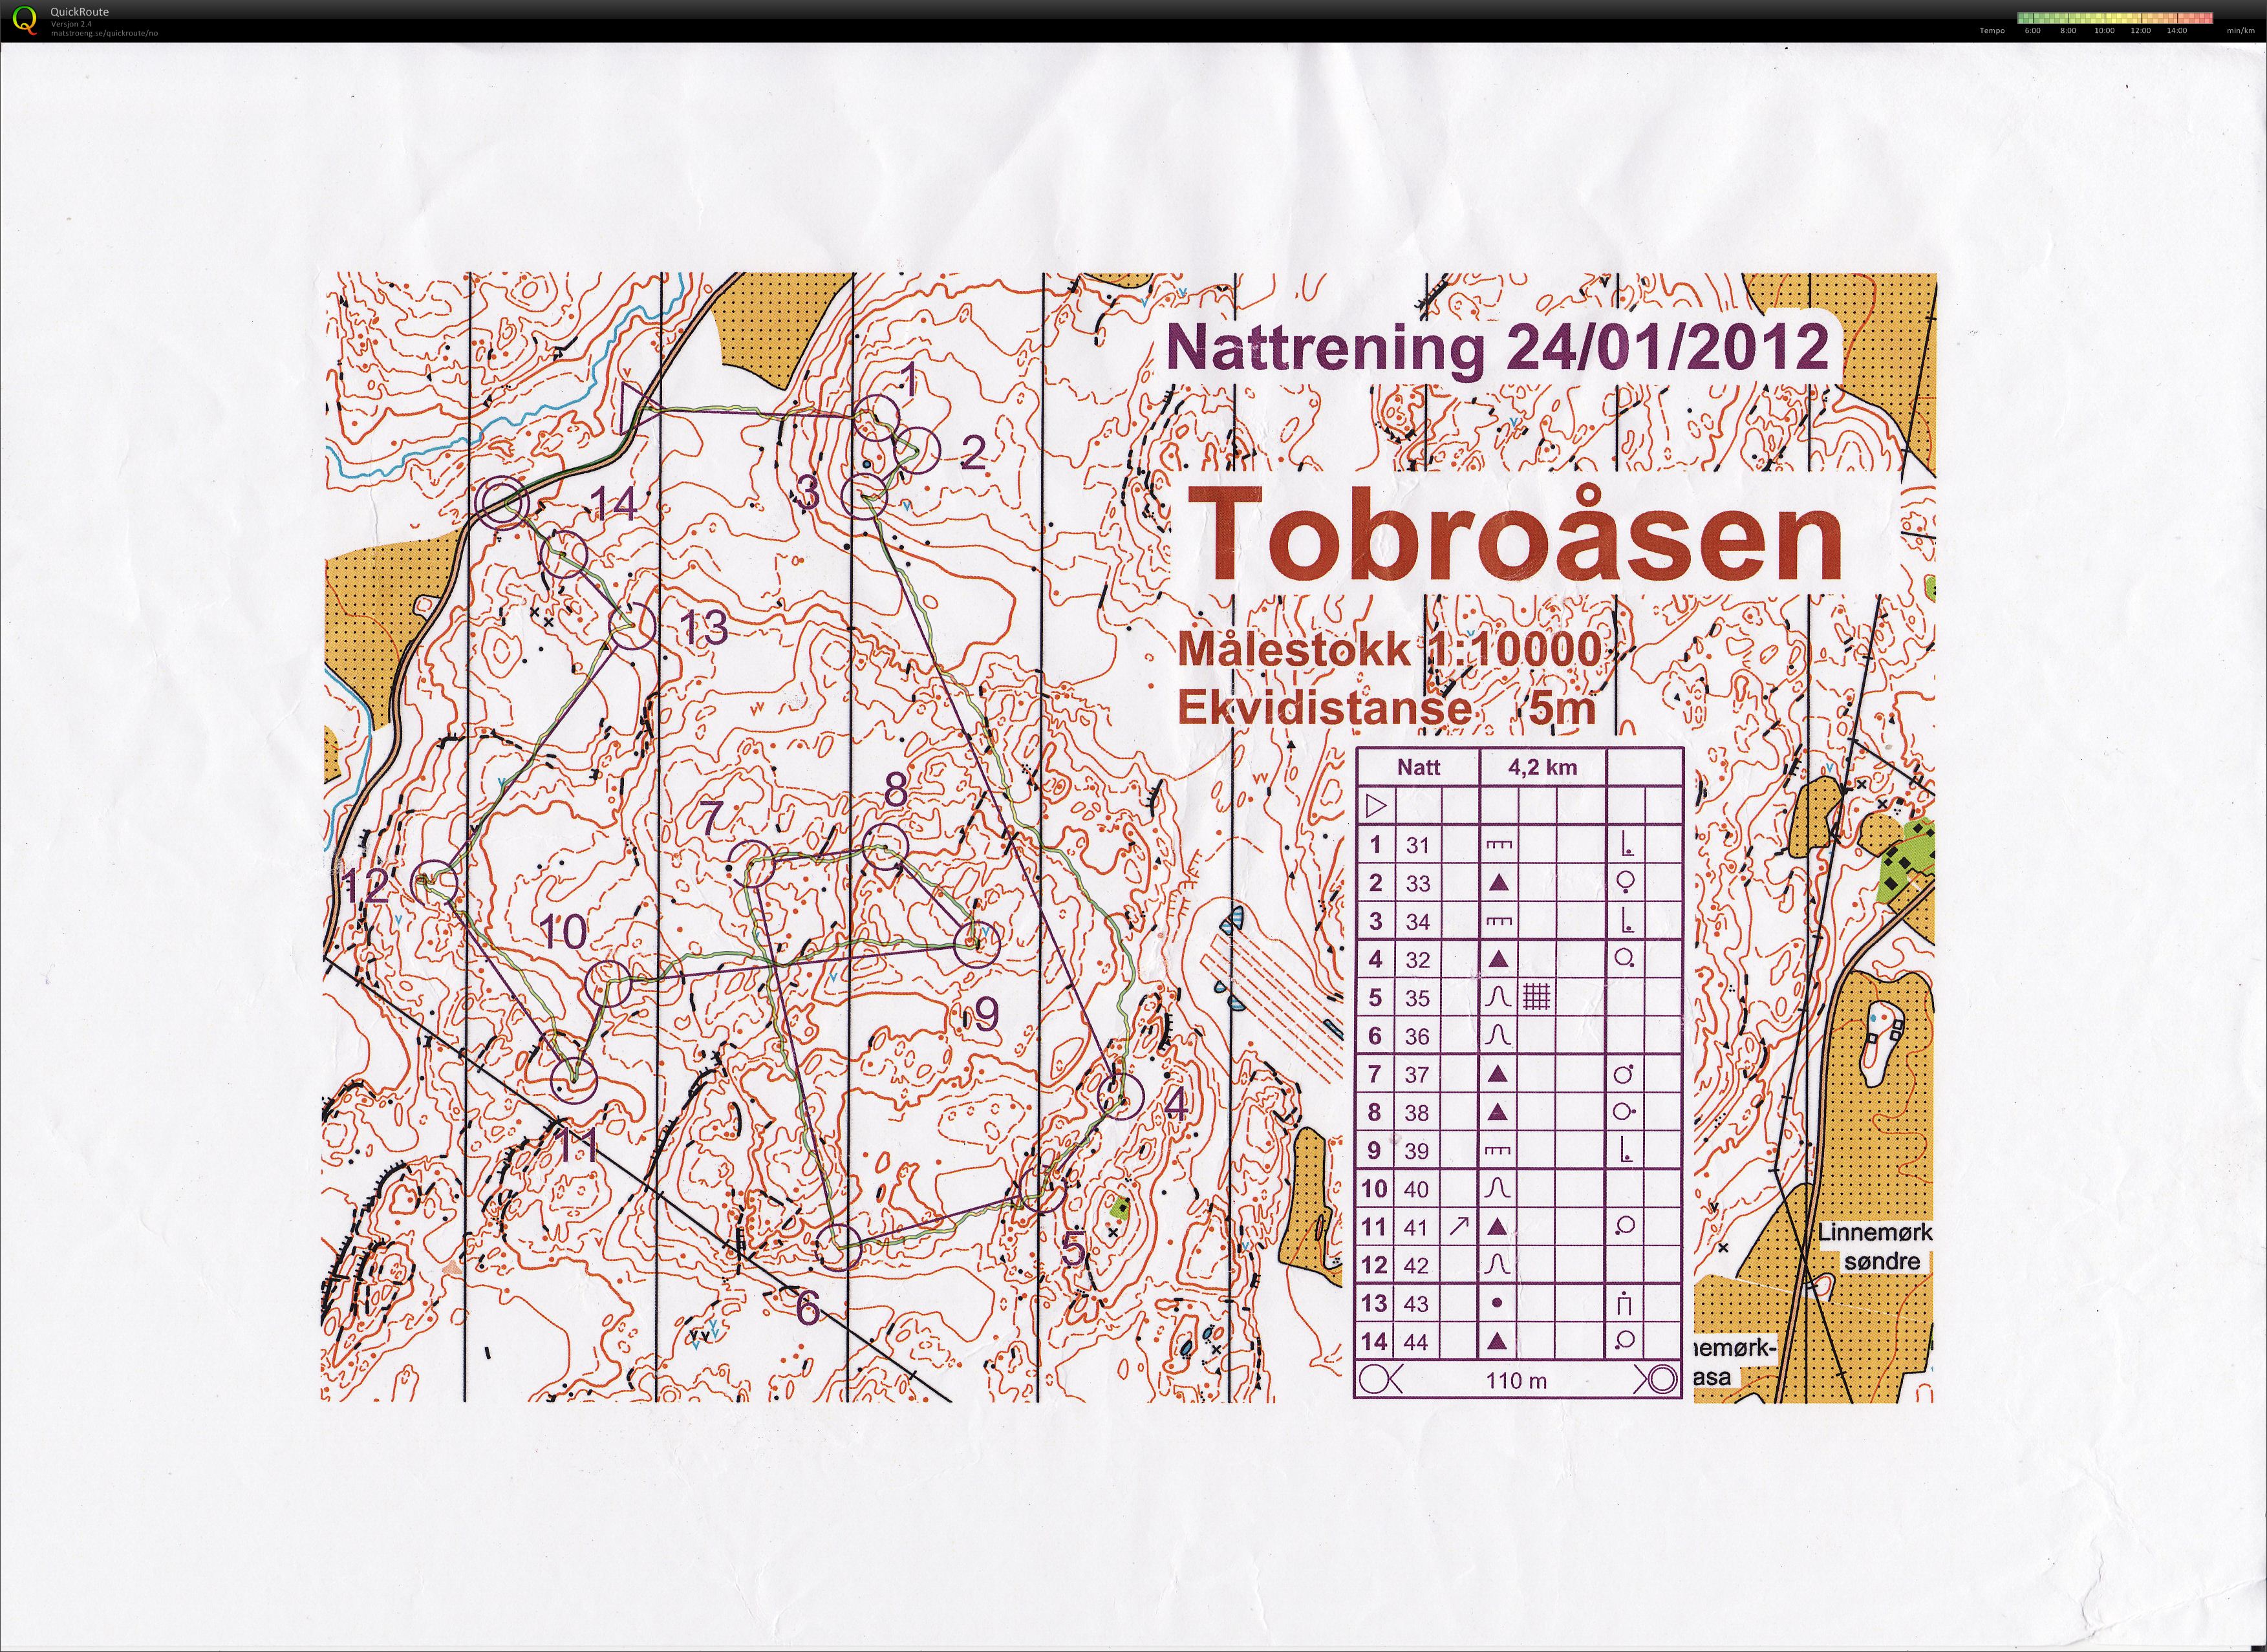 Rolig økt Tobroåsen (14-02-2012)